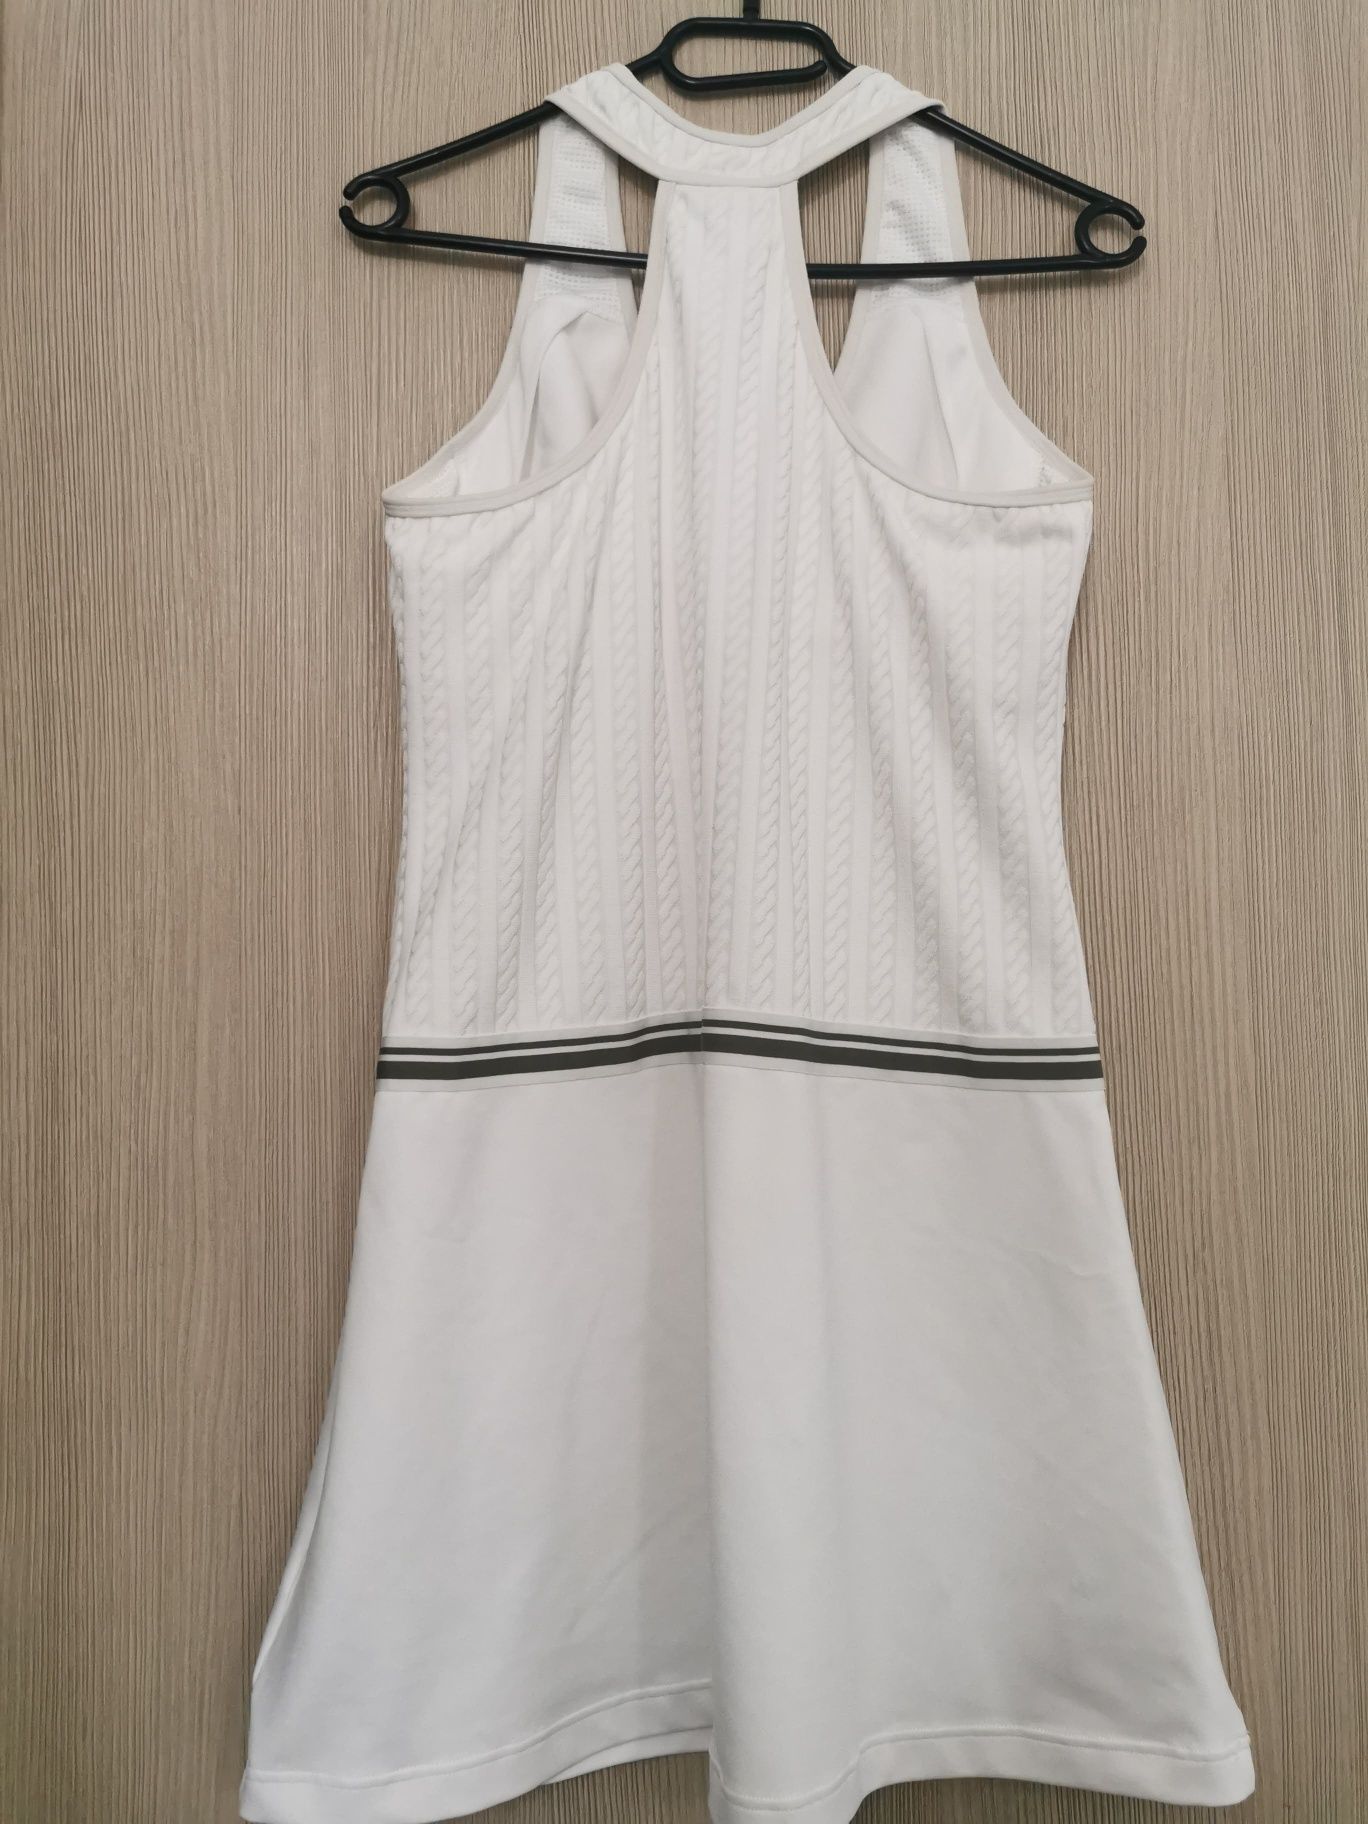 Reebok Play Dry Tennis Dress, size L